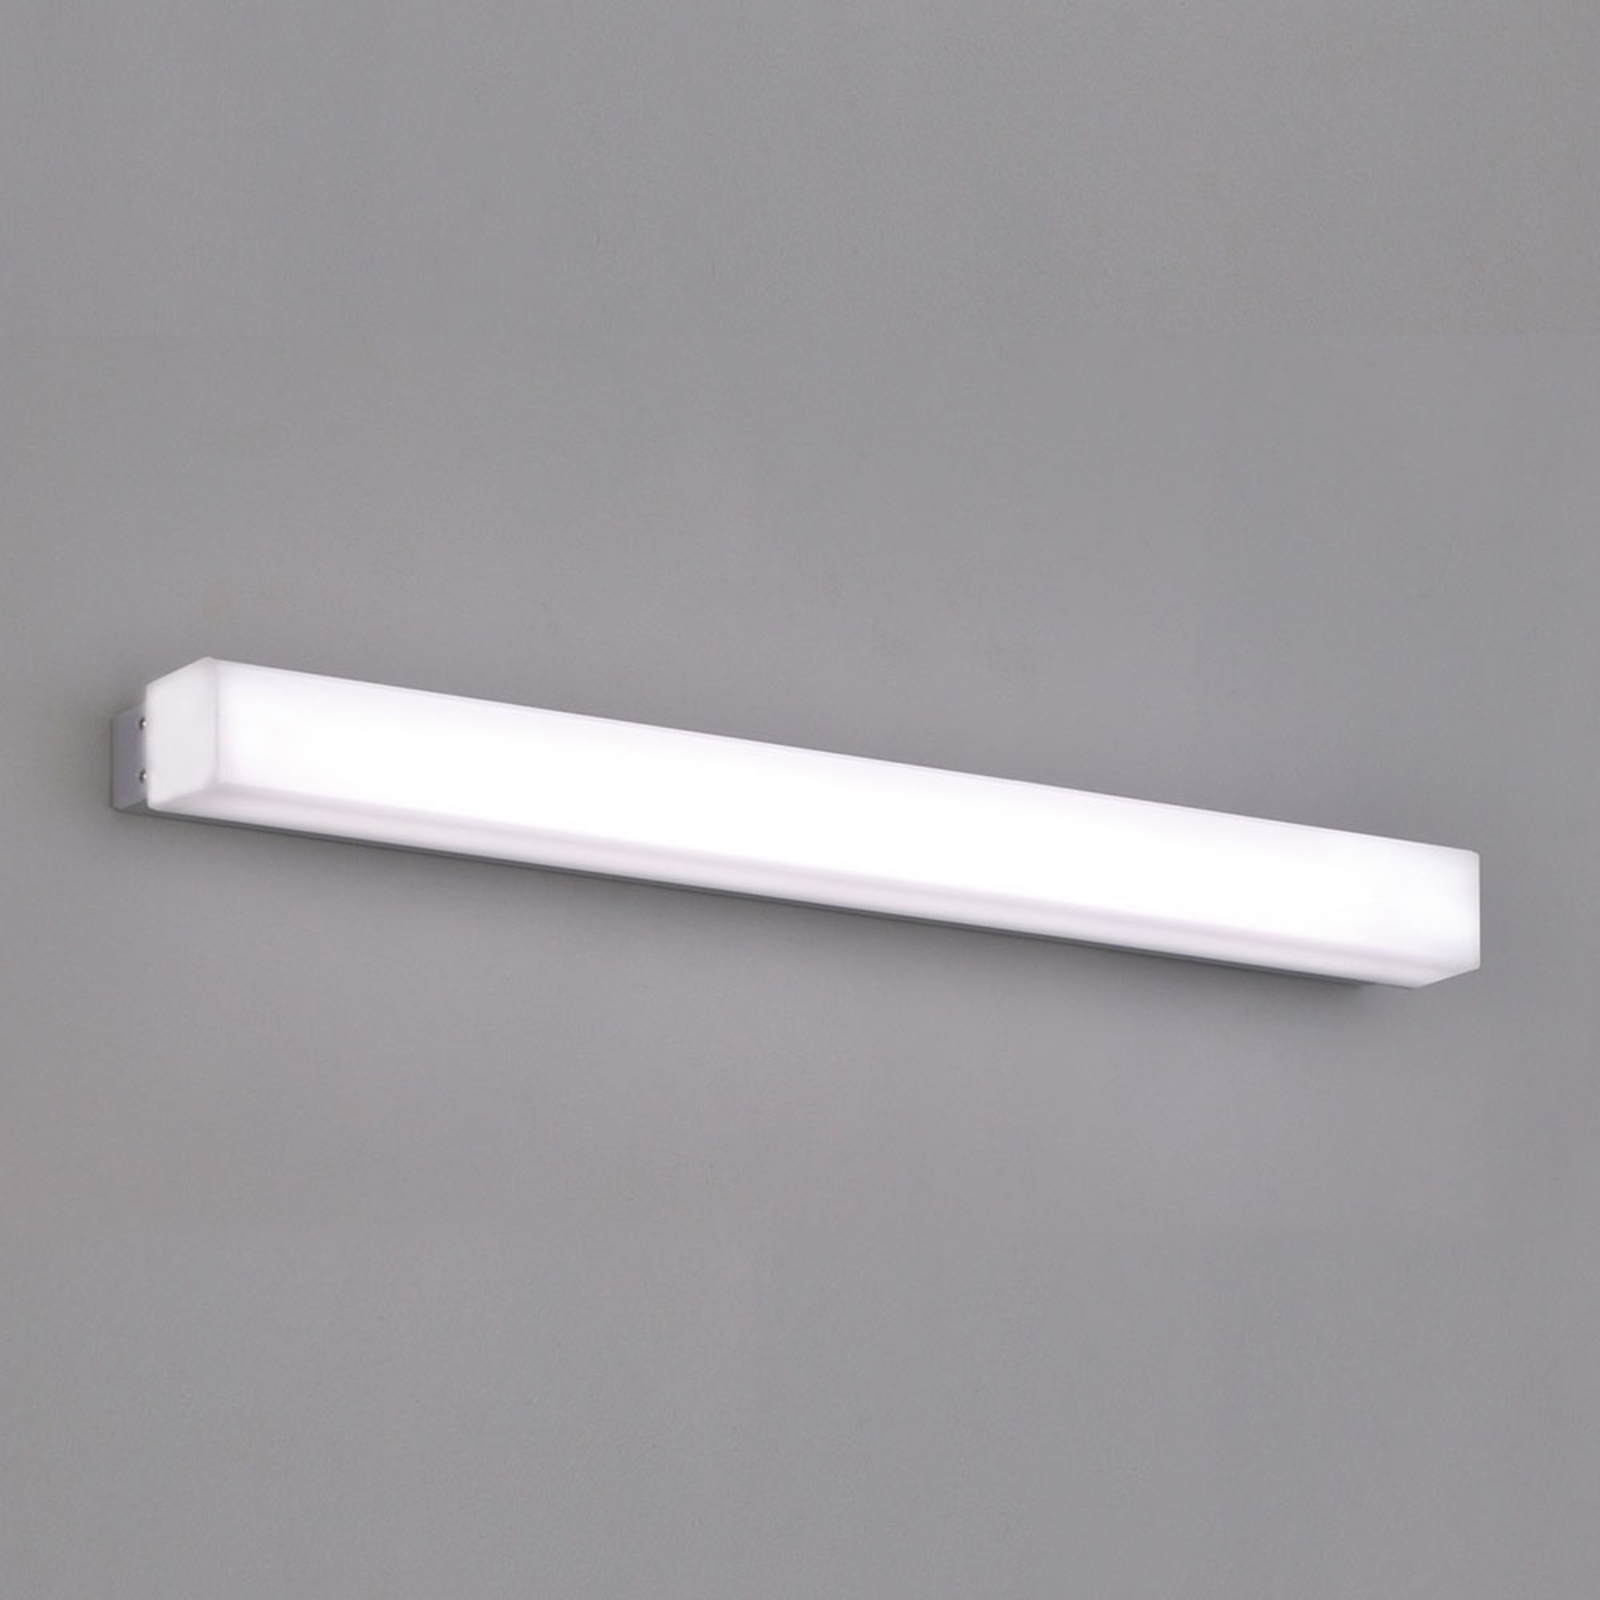 Box LED bathroom wall light, 3,000 K, width 59 cm